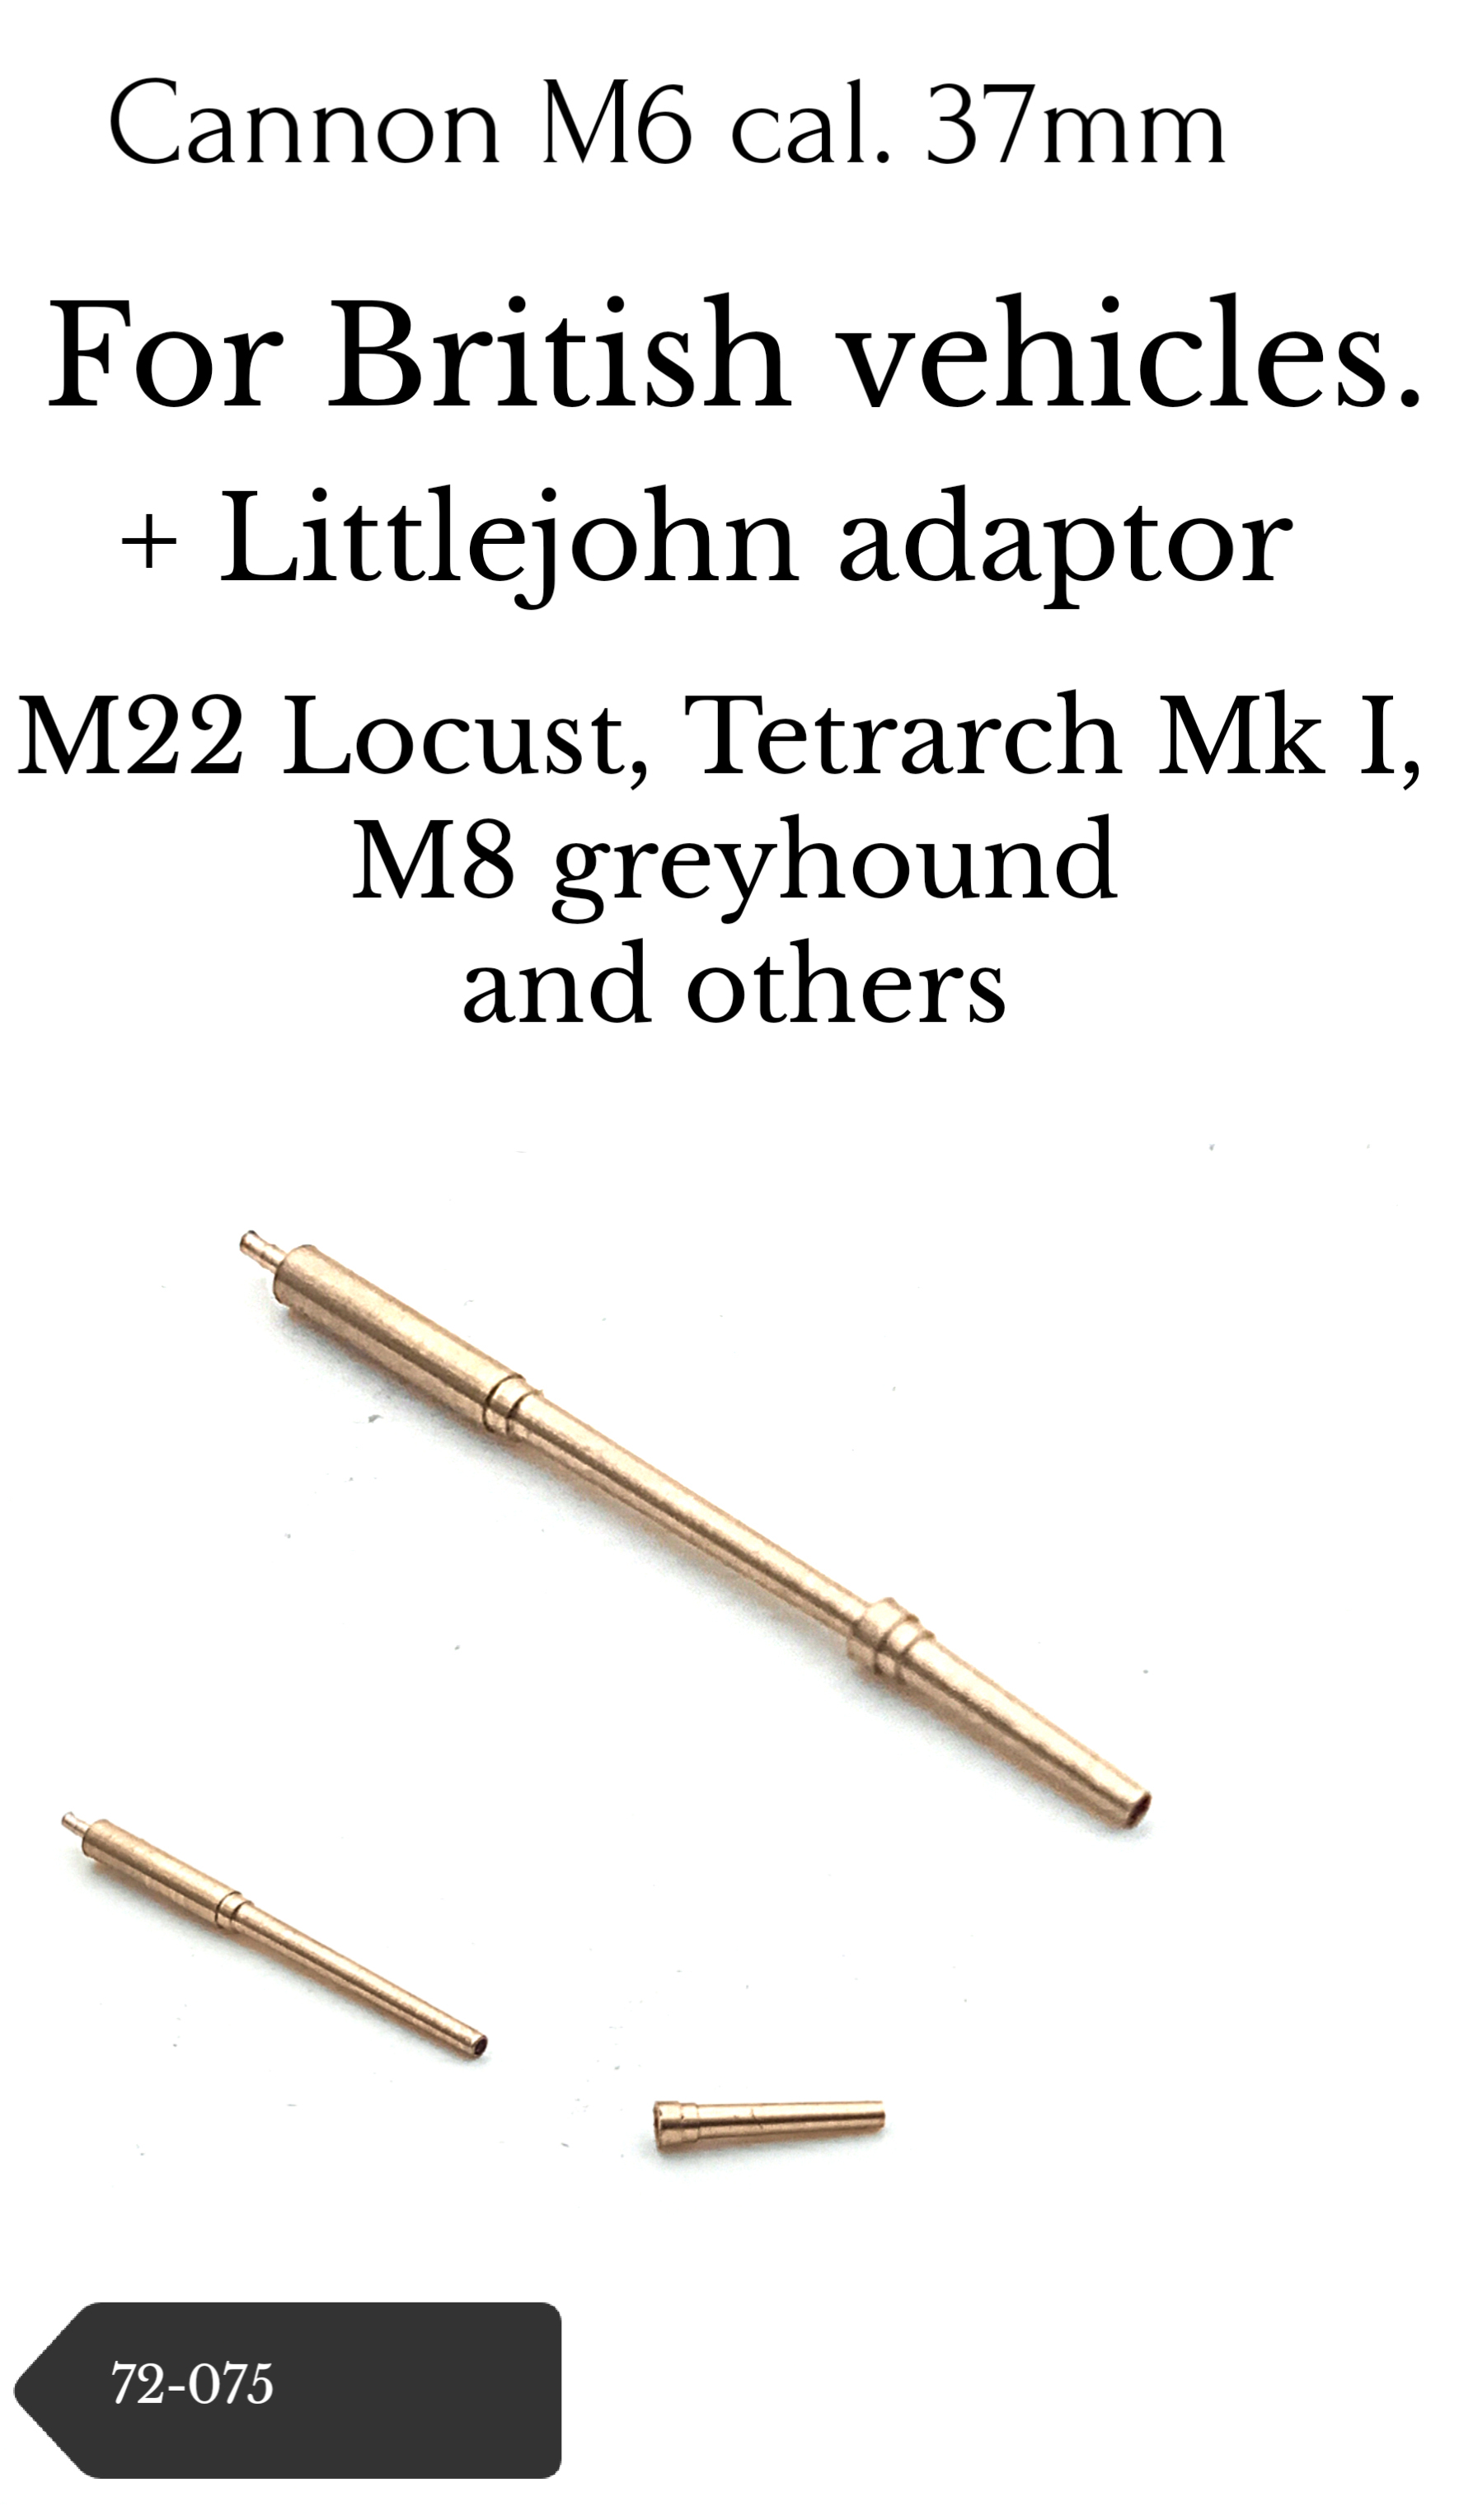 37mm M6 with Littlejohn adaptor